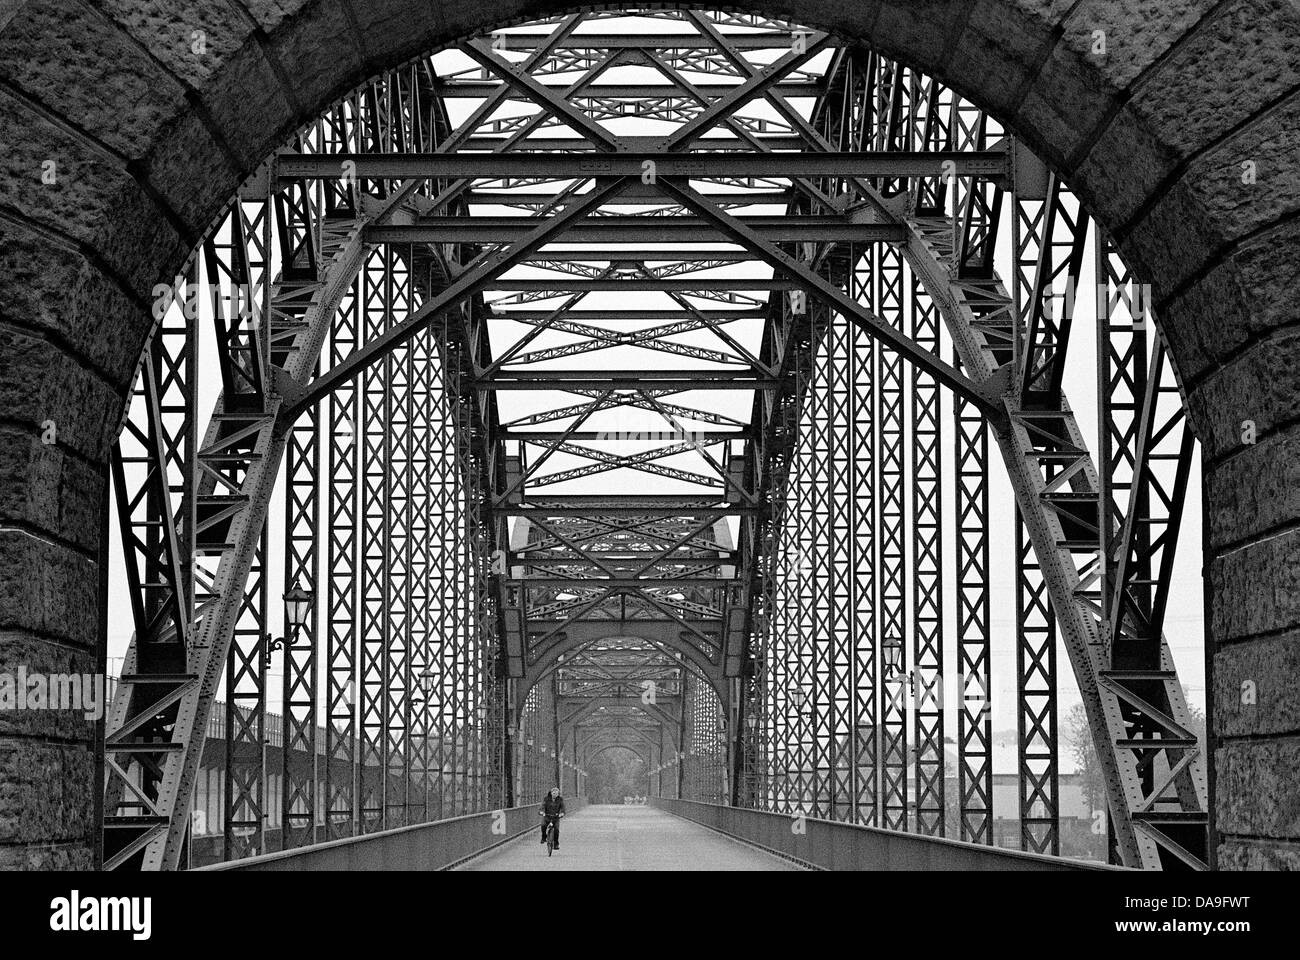 Alte Harburger Elbbrücke (old Harburg Elbe bridge) from 1899 in Hamburg. Stock Photo